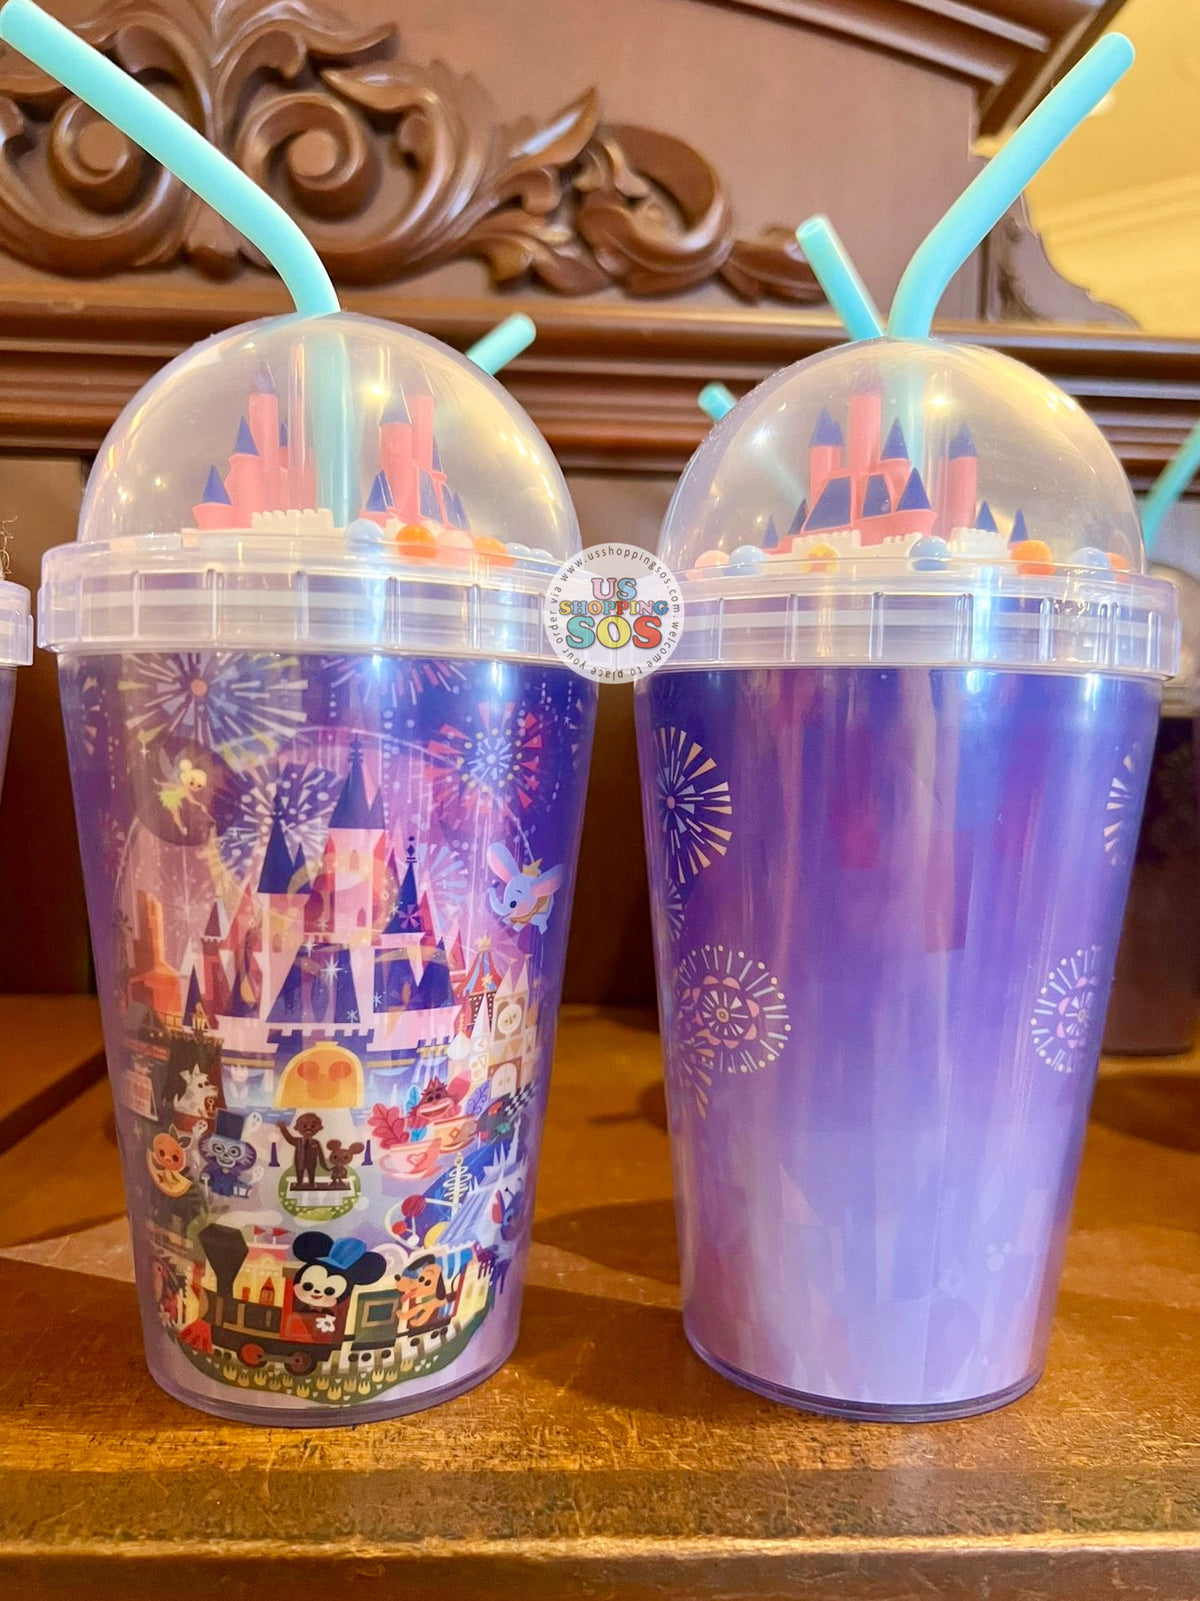 Disney Princess Tumbler with Straw: Tumblers & Water Glasses